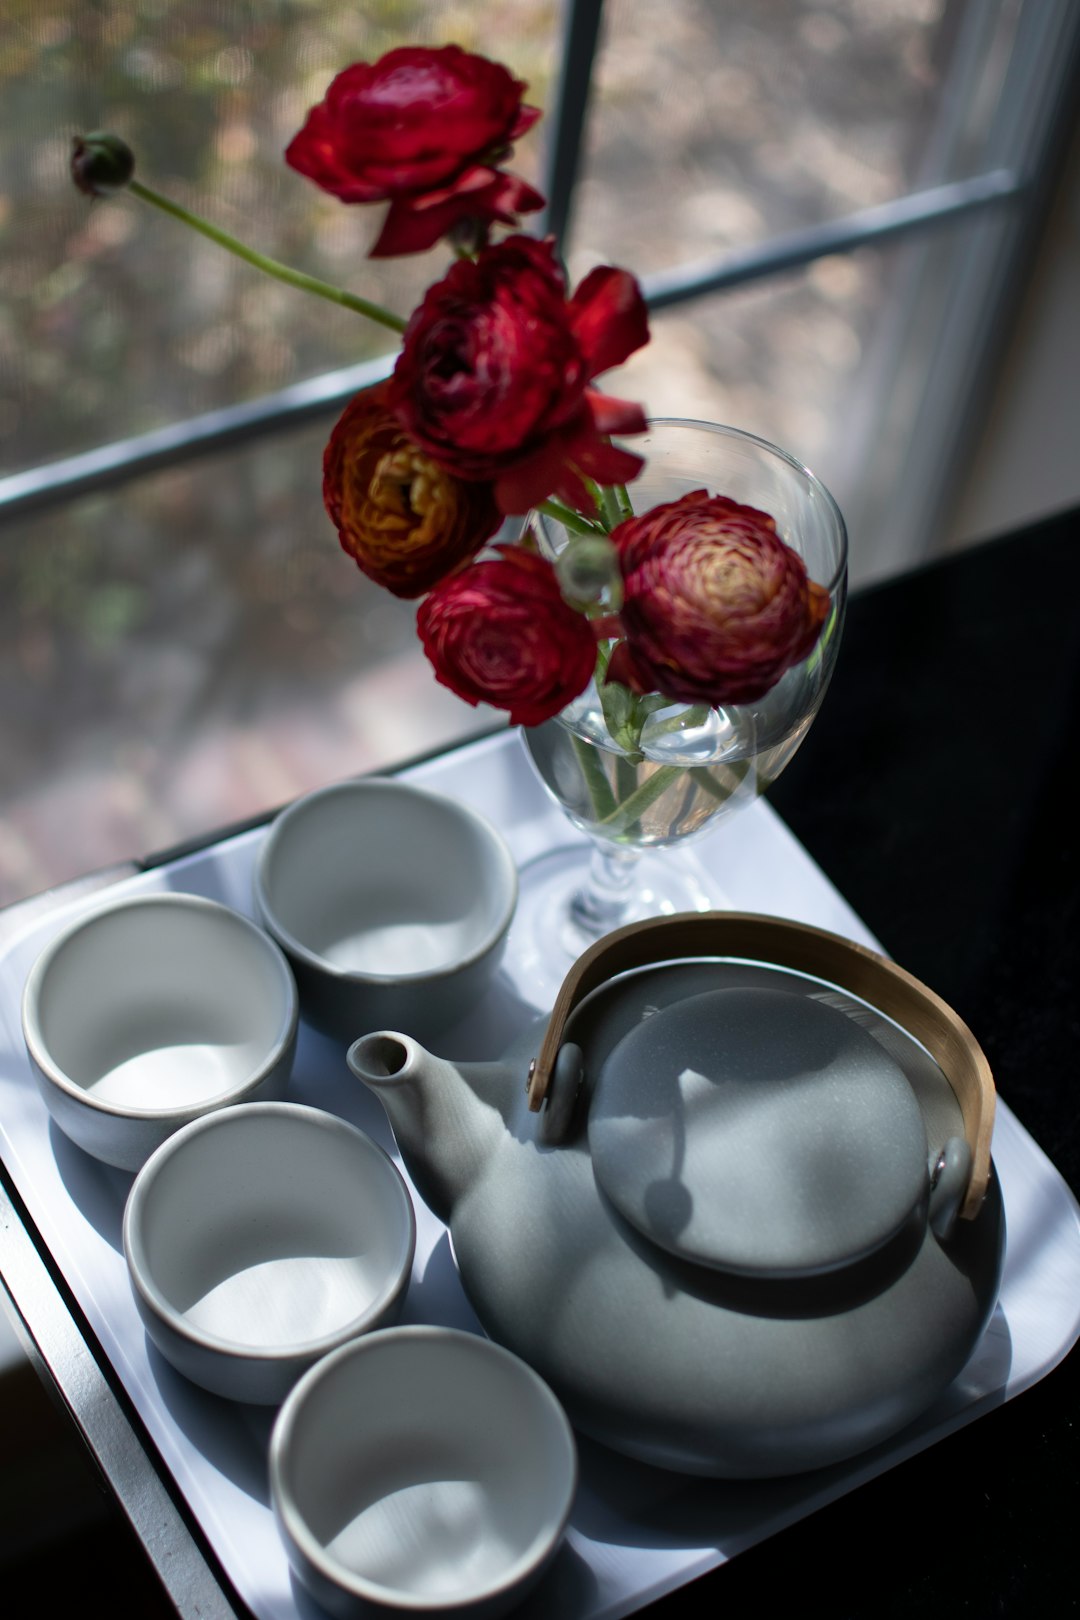 red rose on white ceramic teacup on saucer